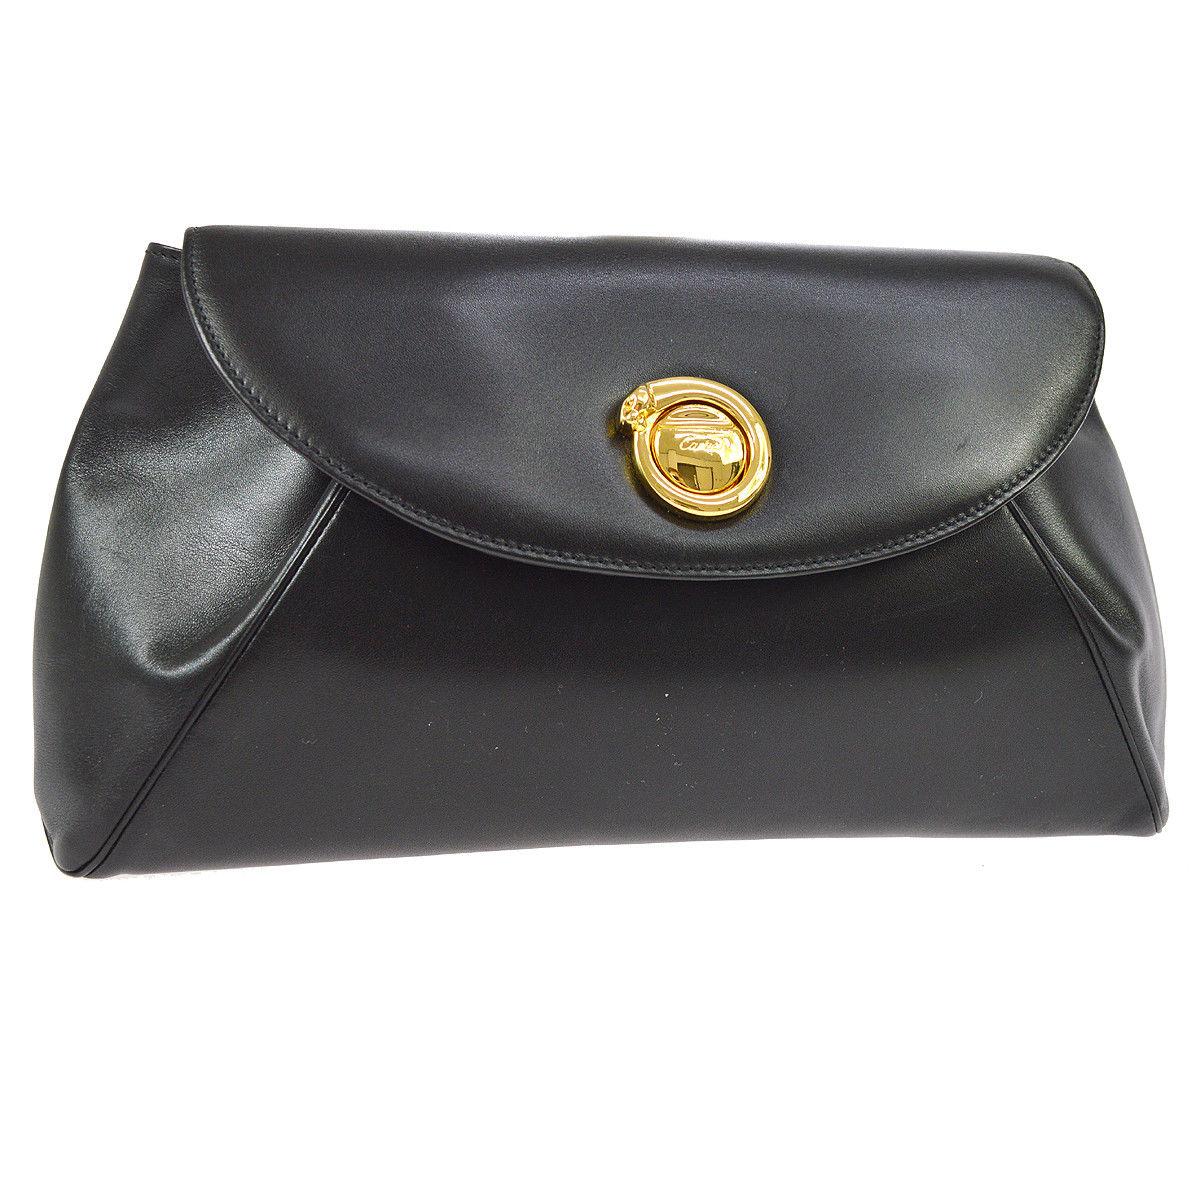 Cartier Black Leather Gold Emblem Envelope Evening Flap Clutch Bag